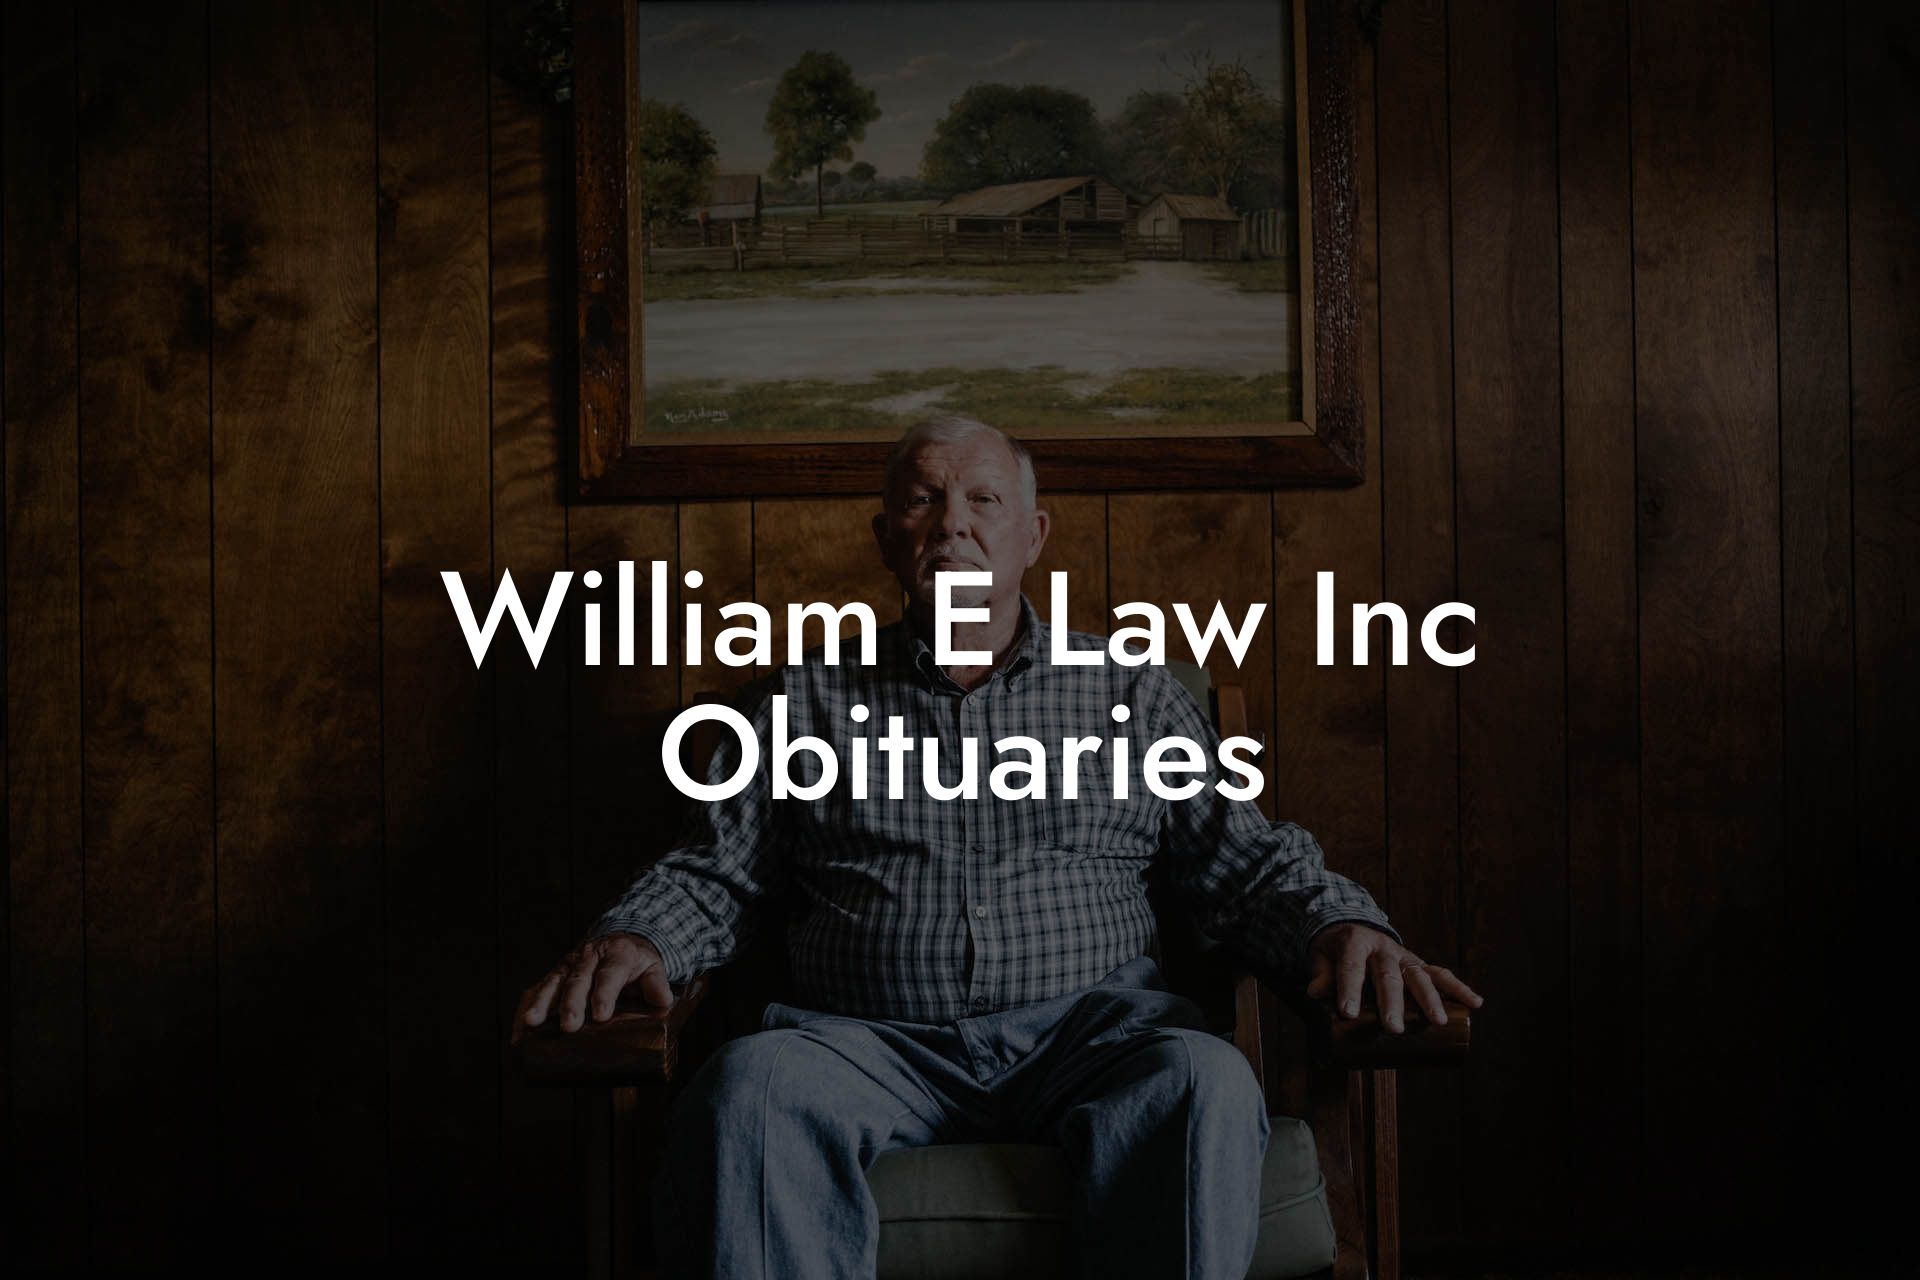 William E Law Inc Obituaries